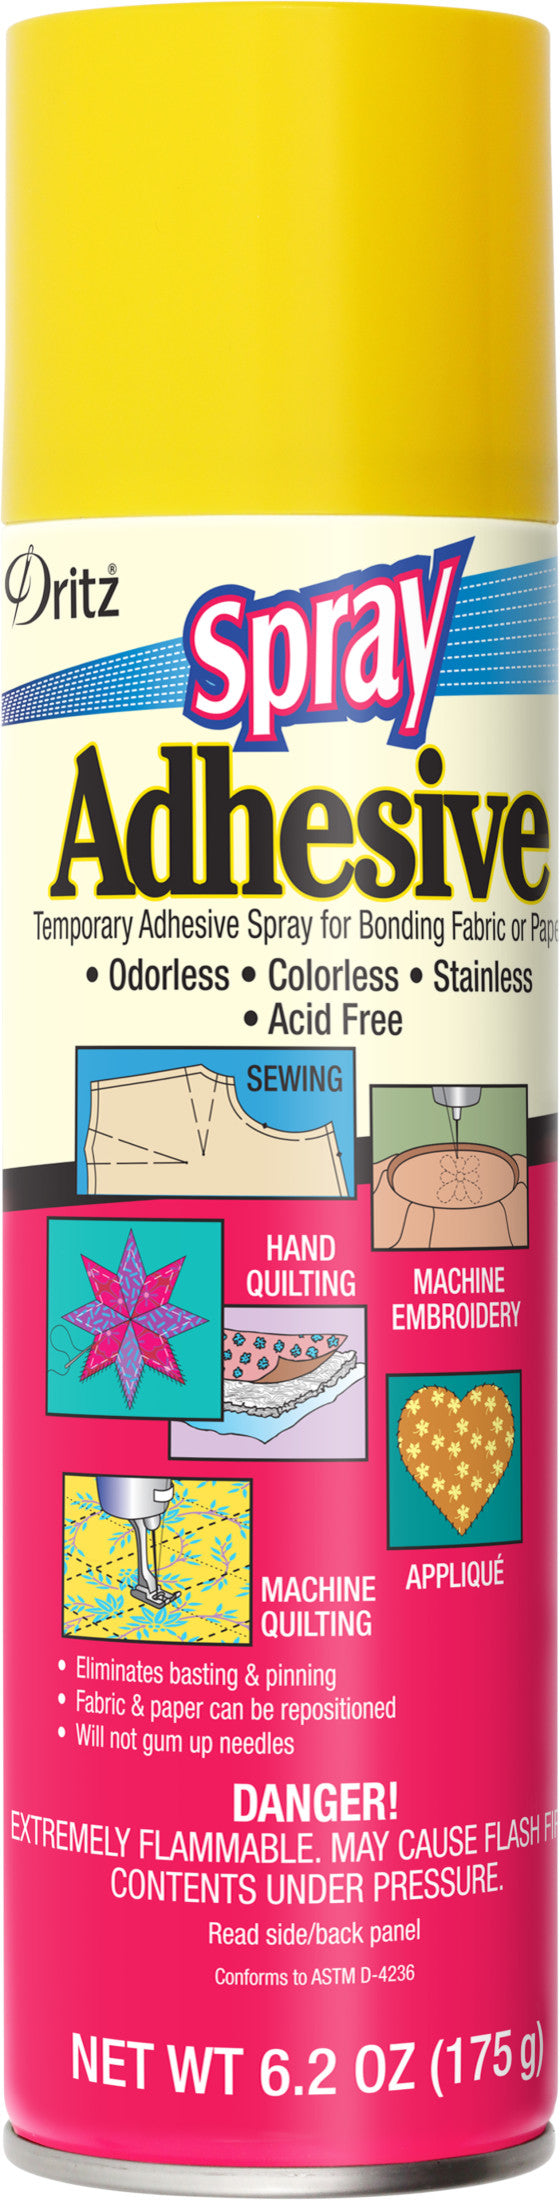 Dritz Spray Adhesive 6.2oz